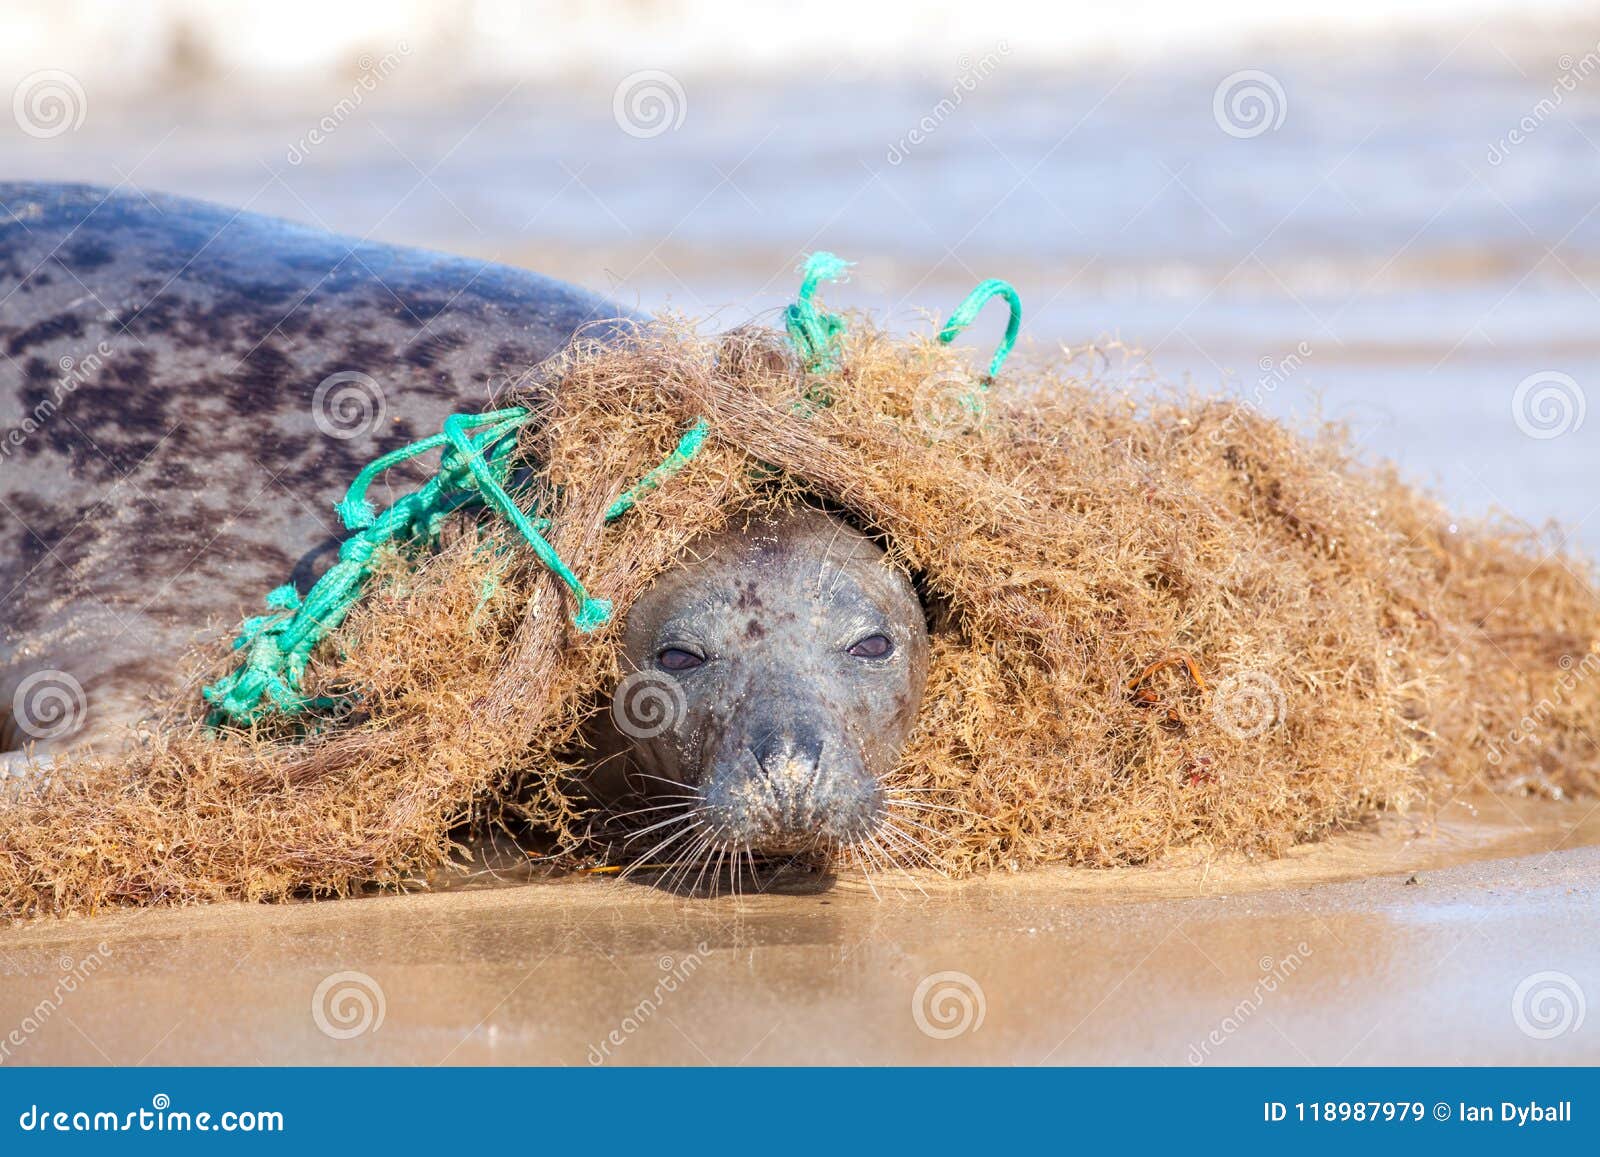 plastic marine pollution. seal caught in tangled nylon fishing n